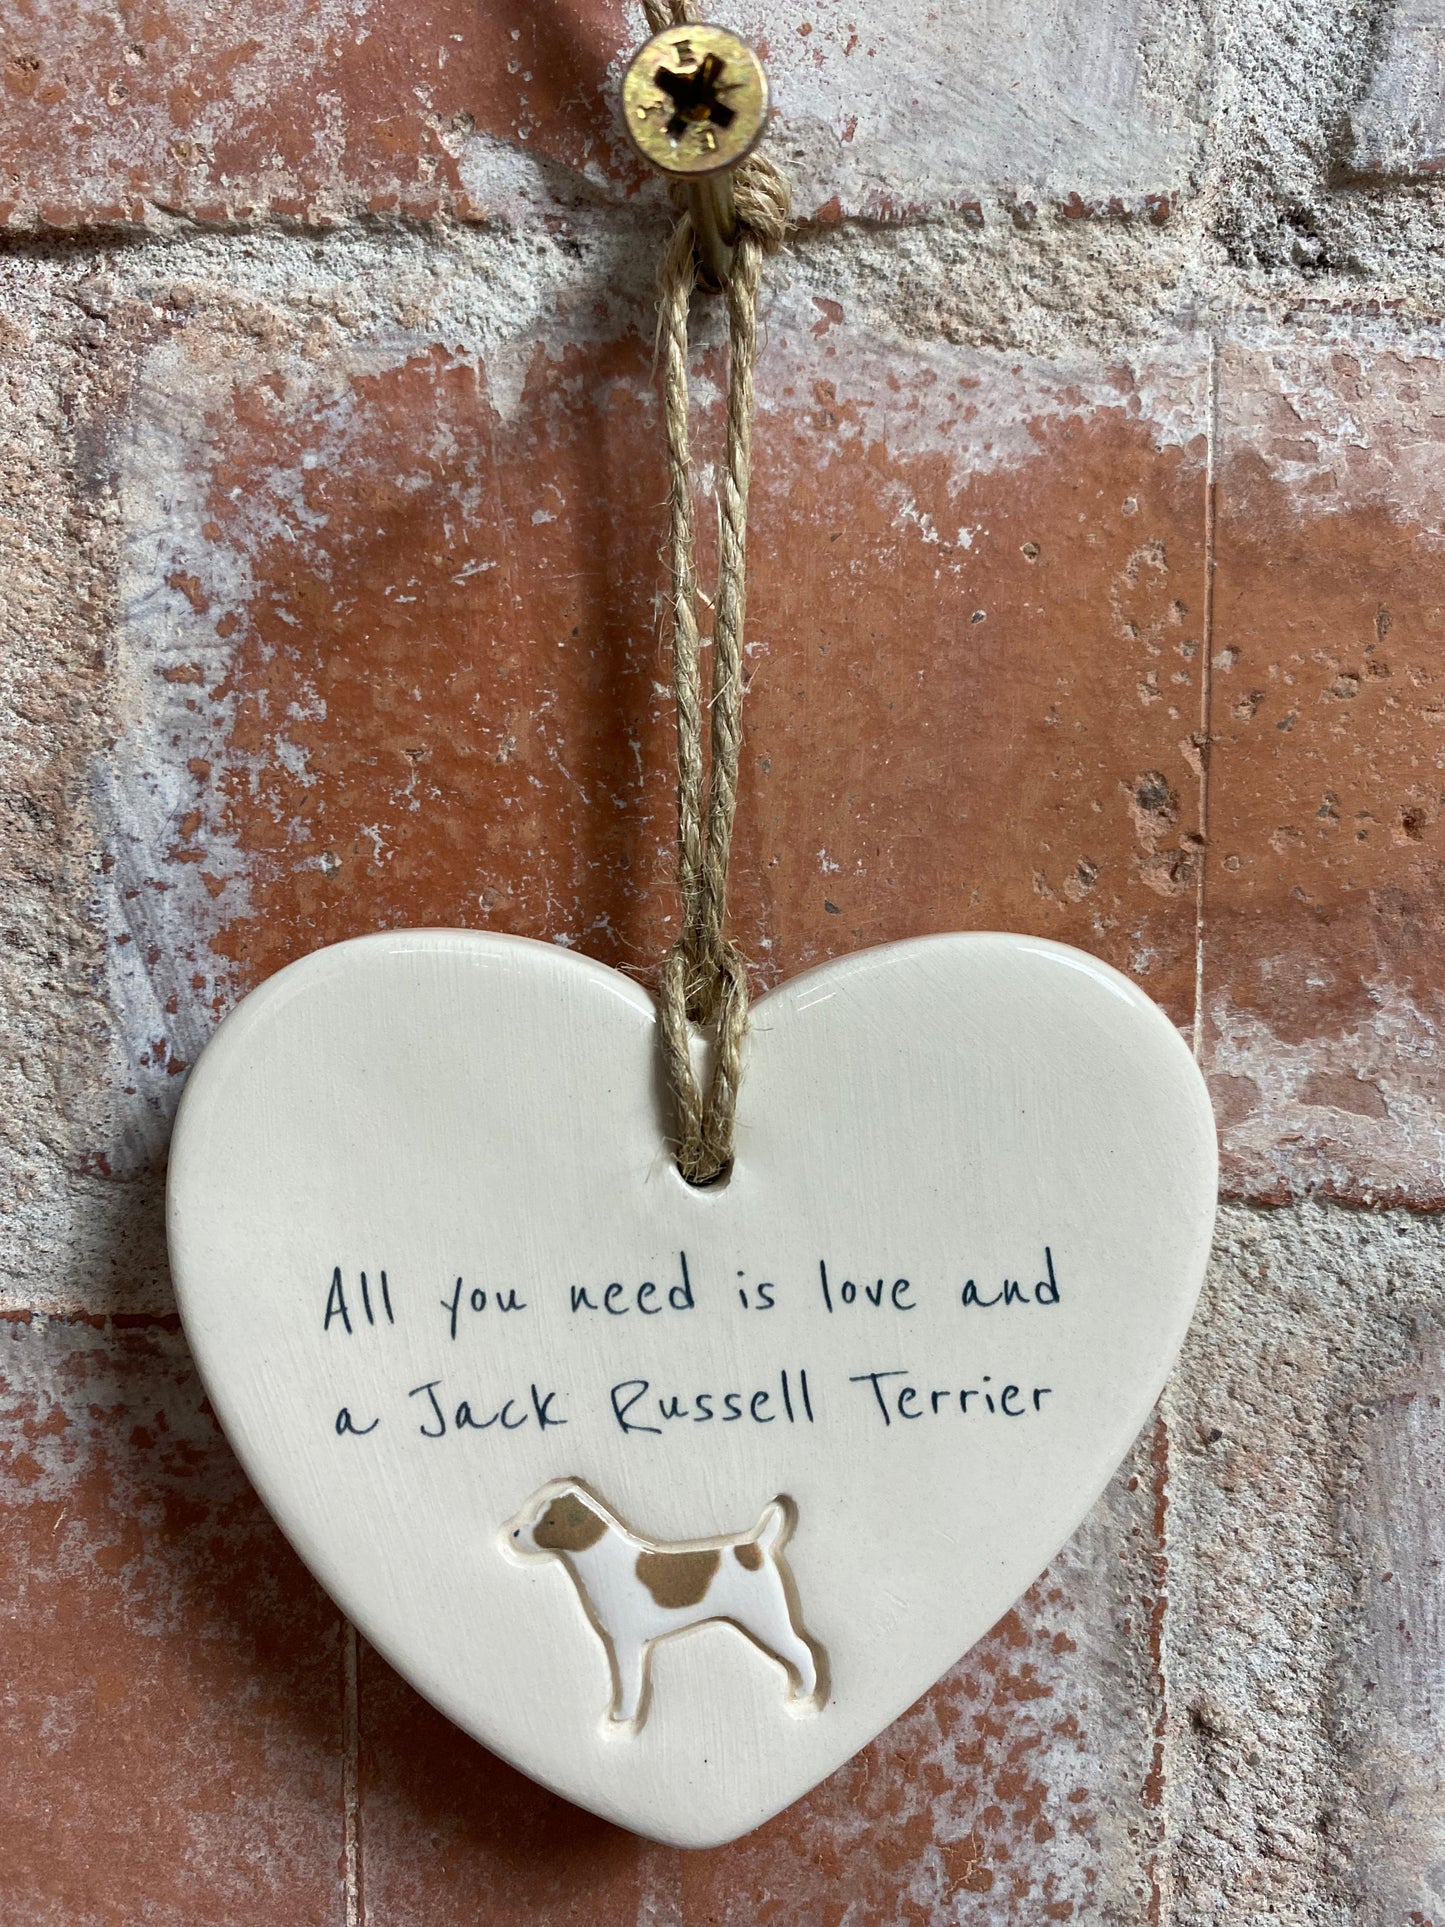 Jack Russell Terrier heart